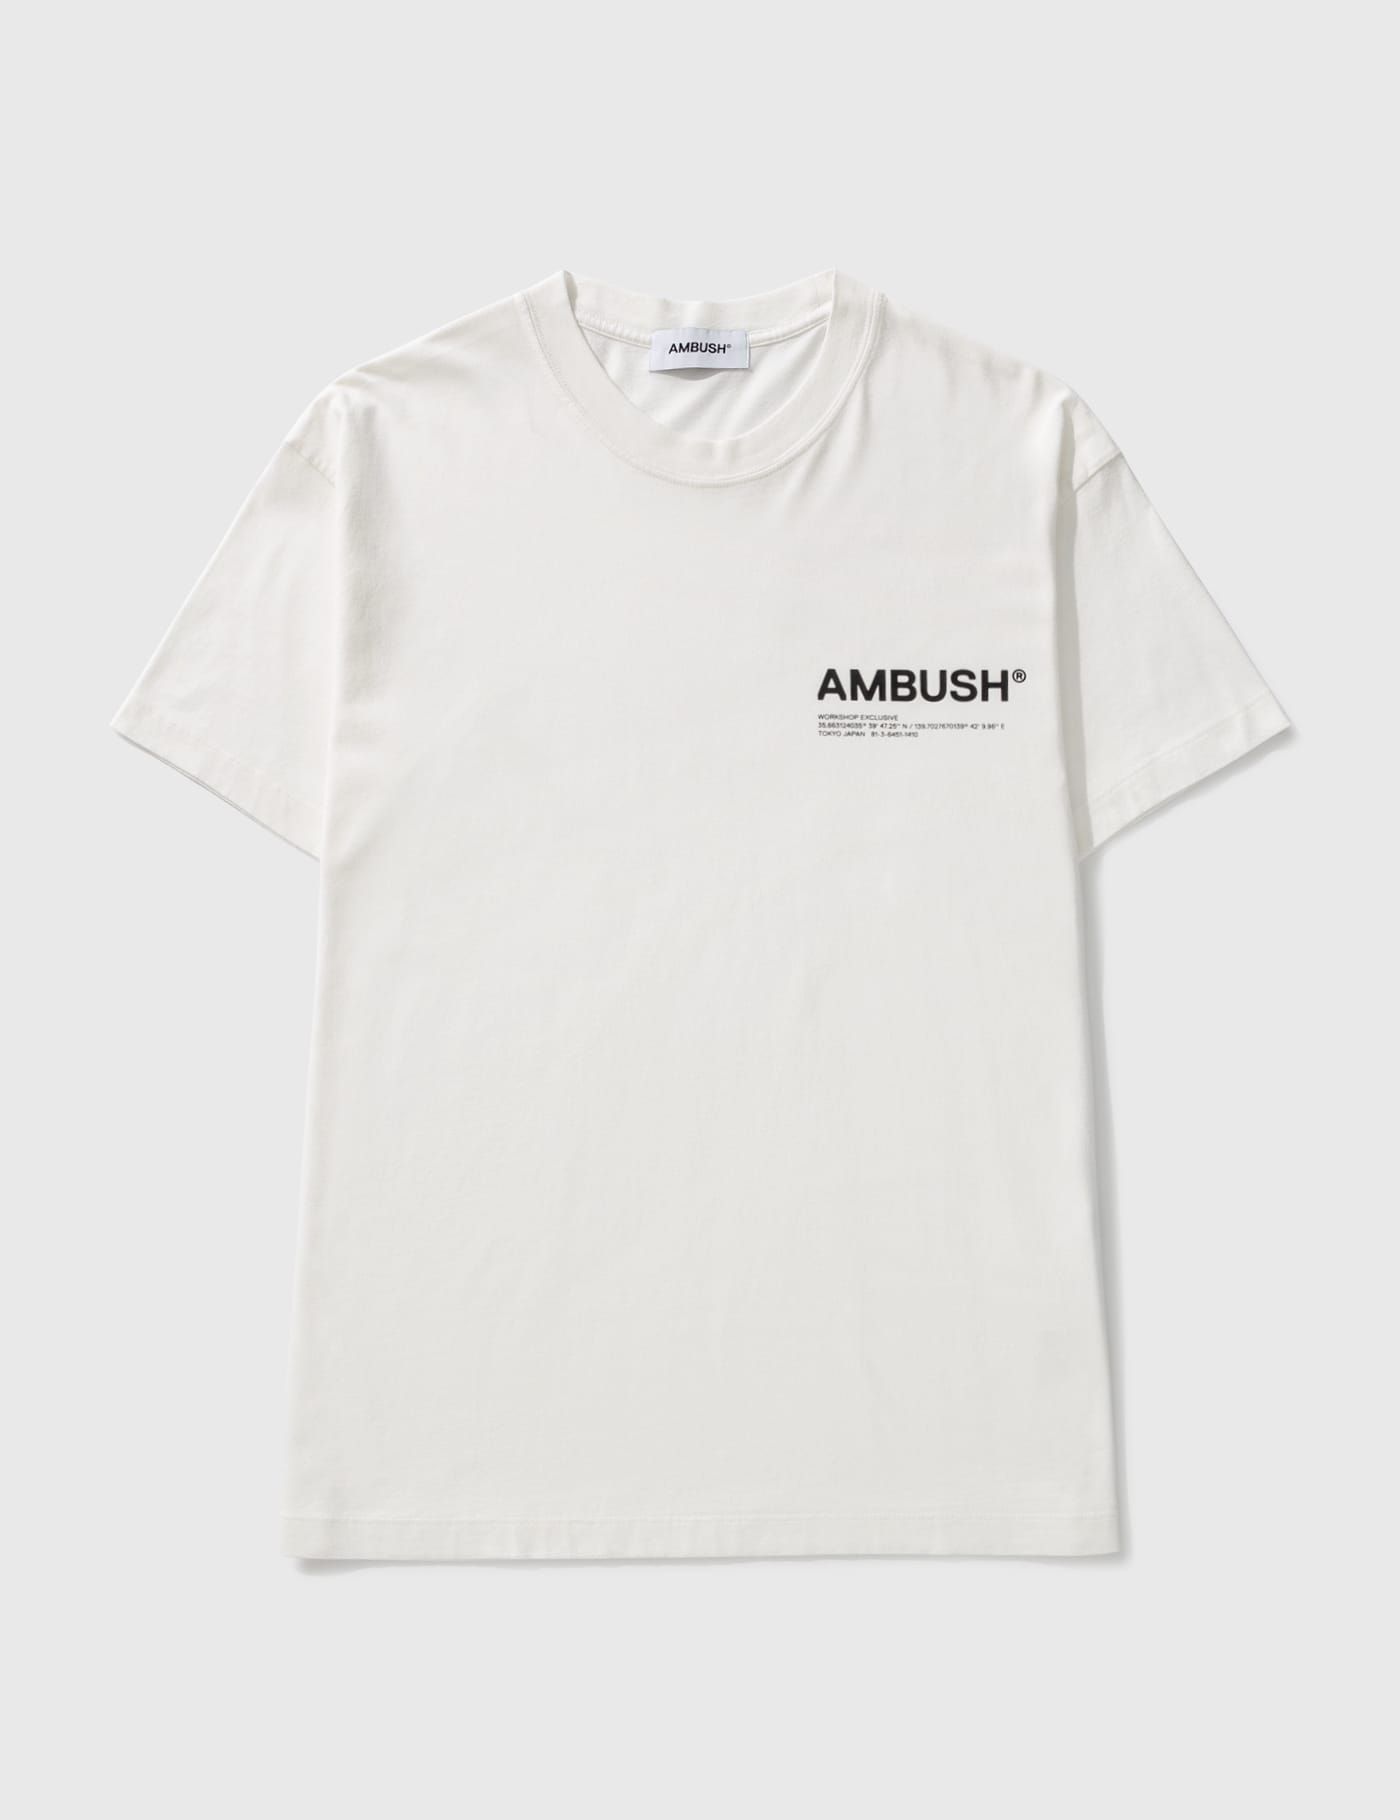 AMBUSH® - Jersey Workshop T-shirt | HBX - Globally Curated Fashion